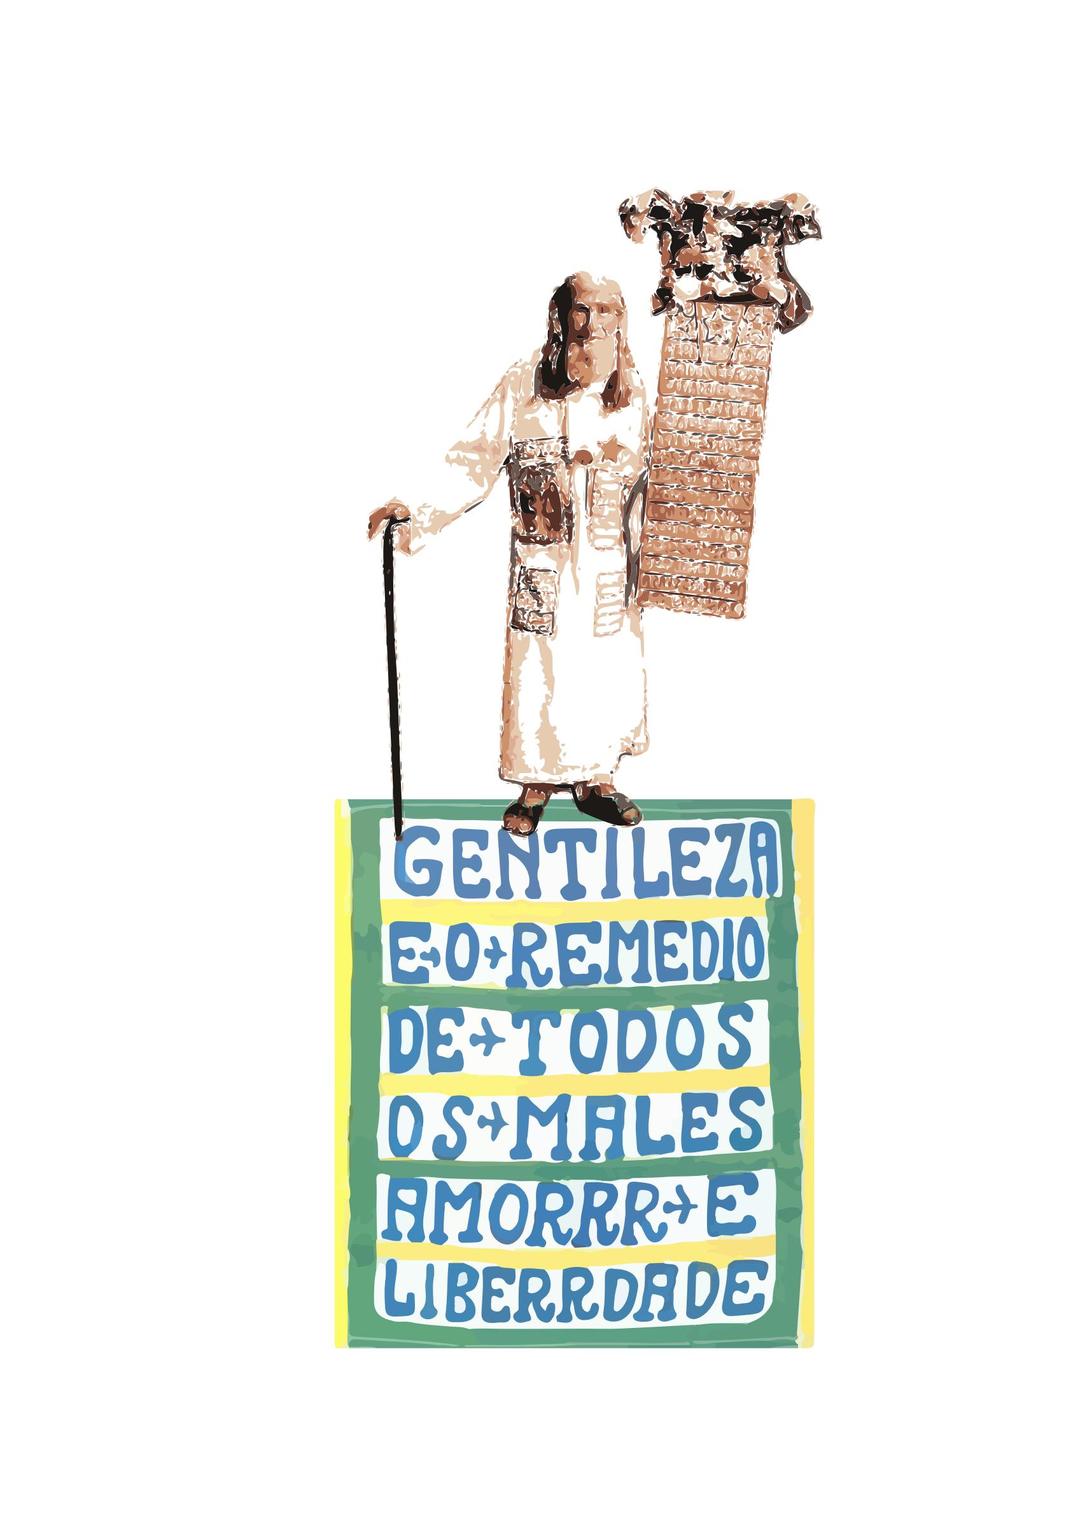 Gentileza-Brazilian Prophet-Tribute 4 png transparent